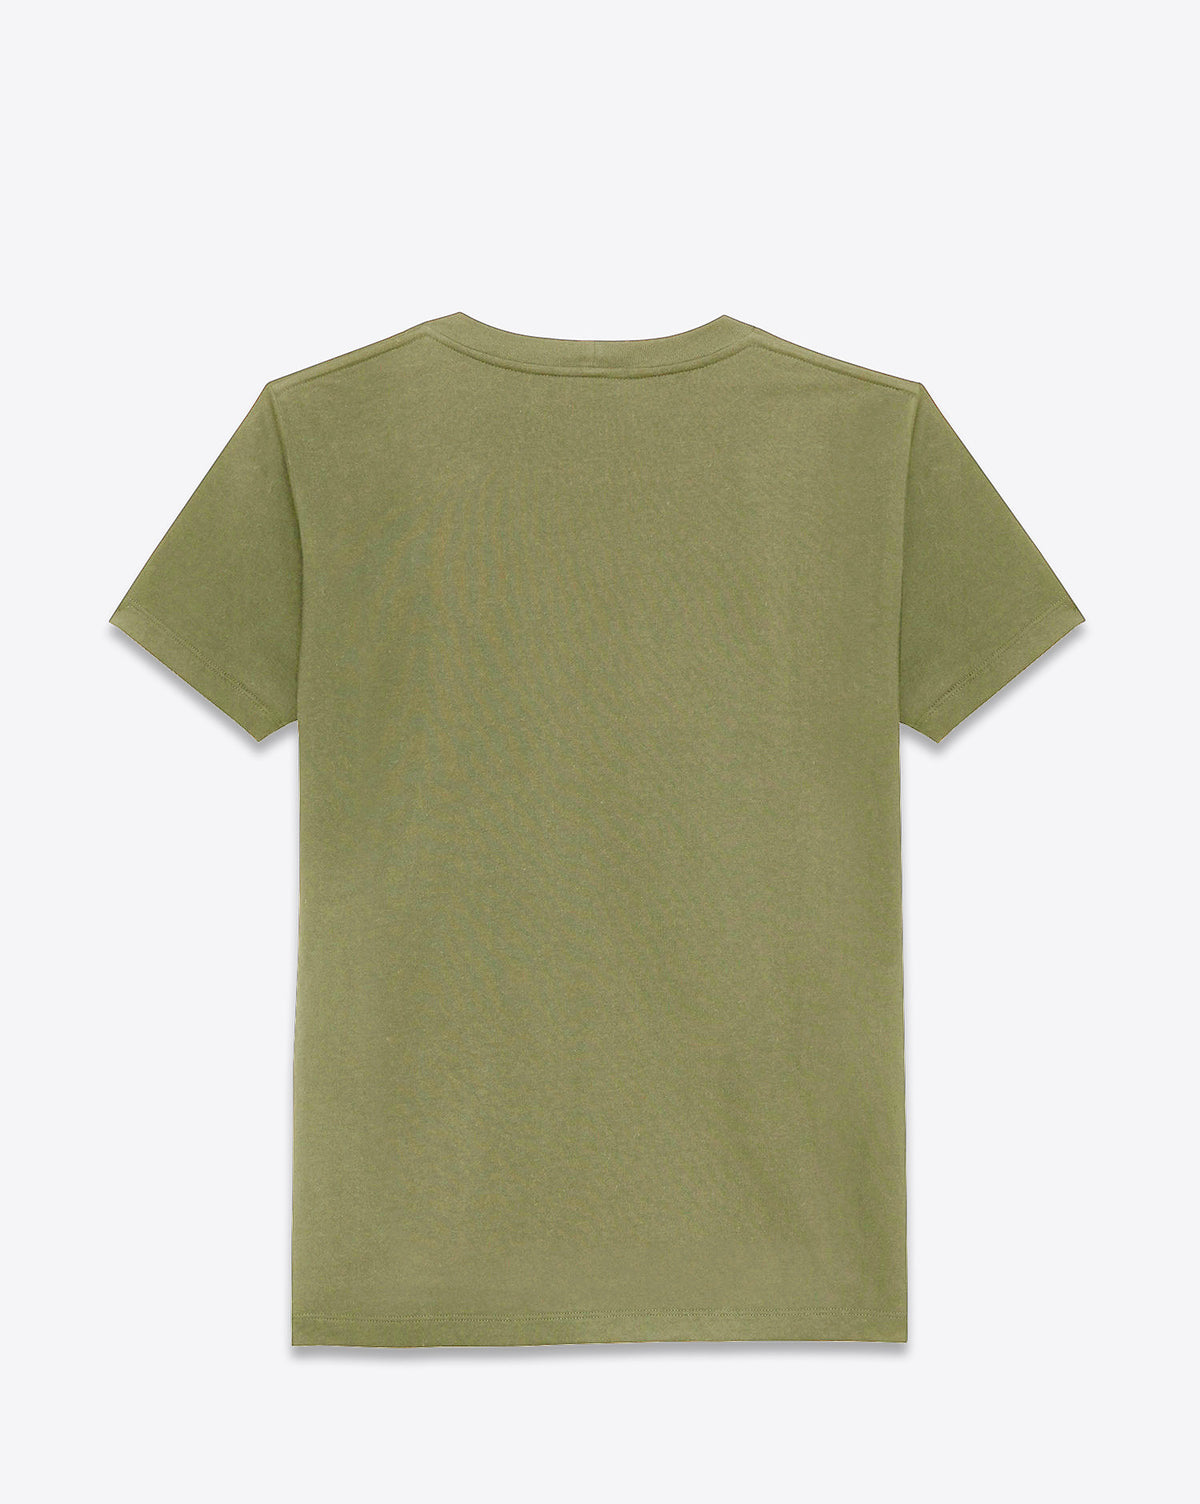 Wavy Baby T-Shirt Olive Green - DEMEANOIR - 2